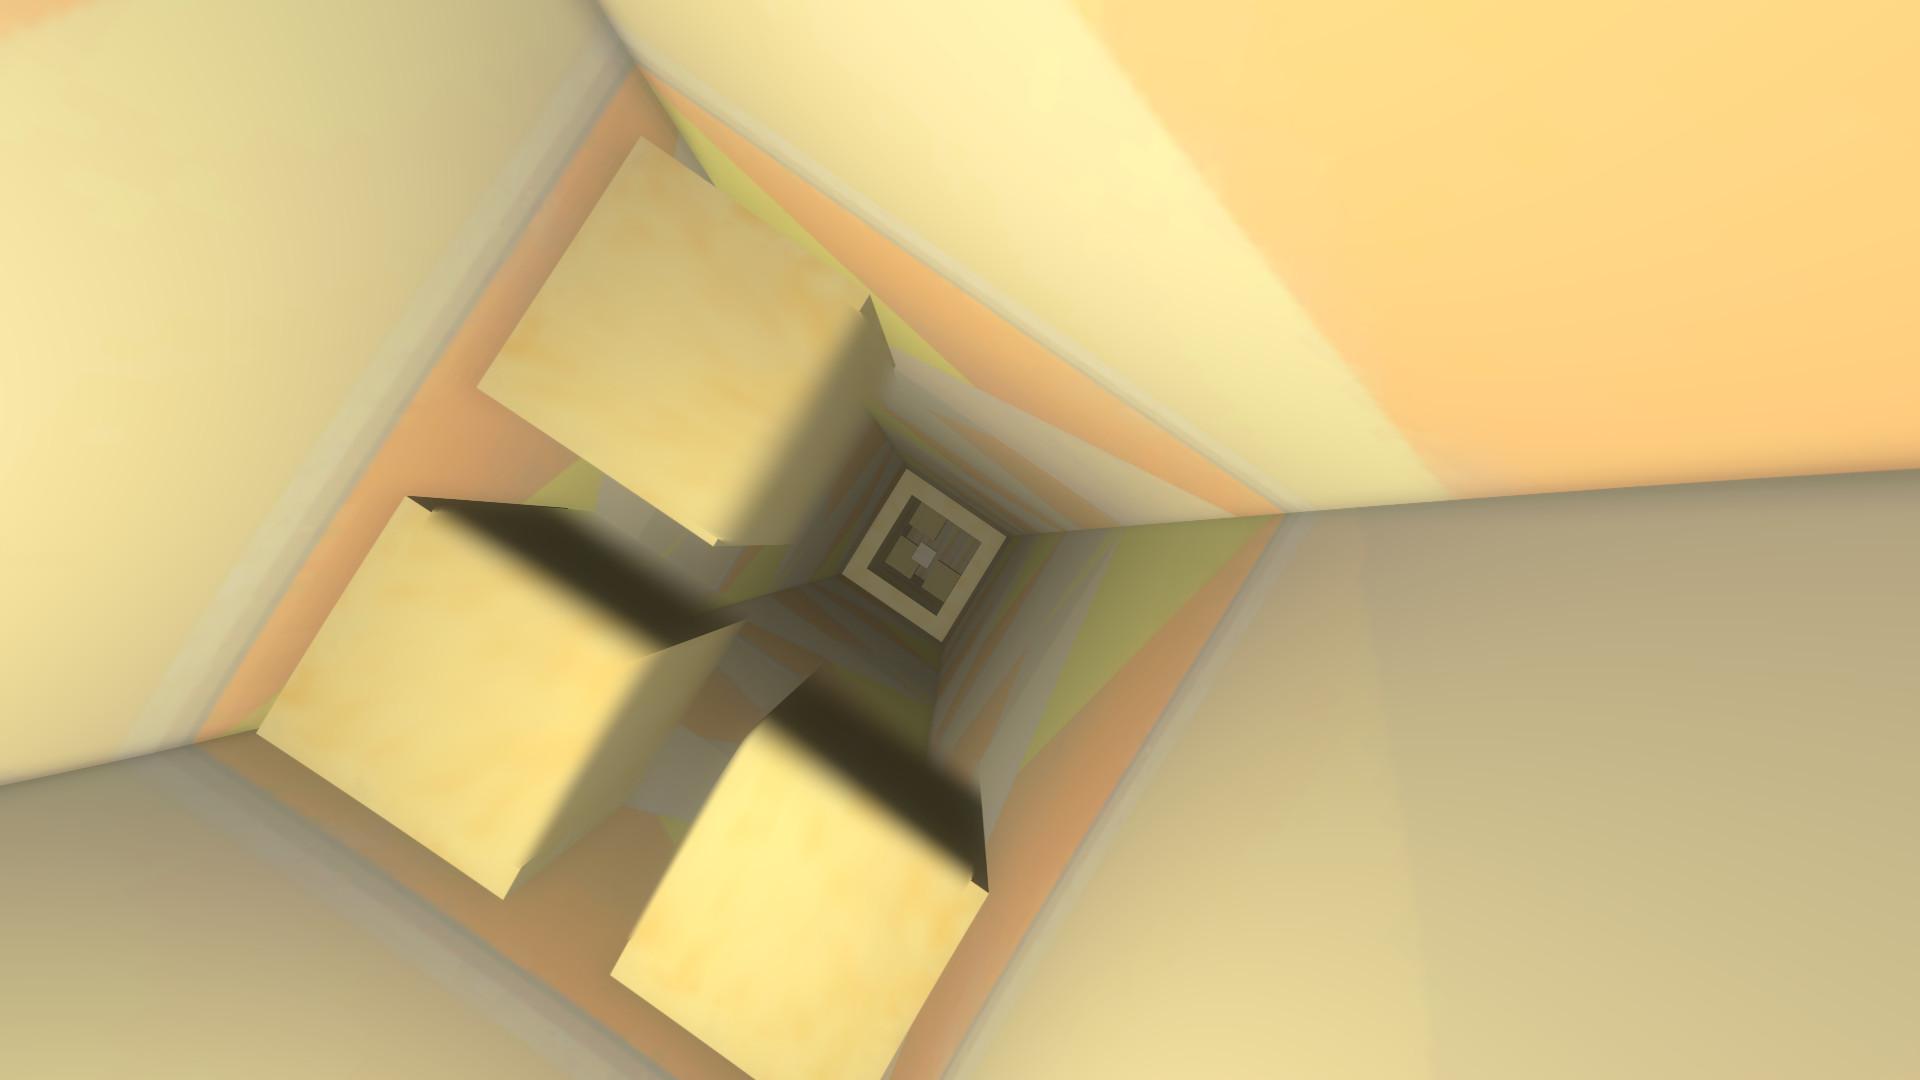 Screenshot №1 from game Approaching Blocks